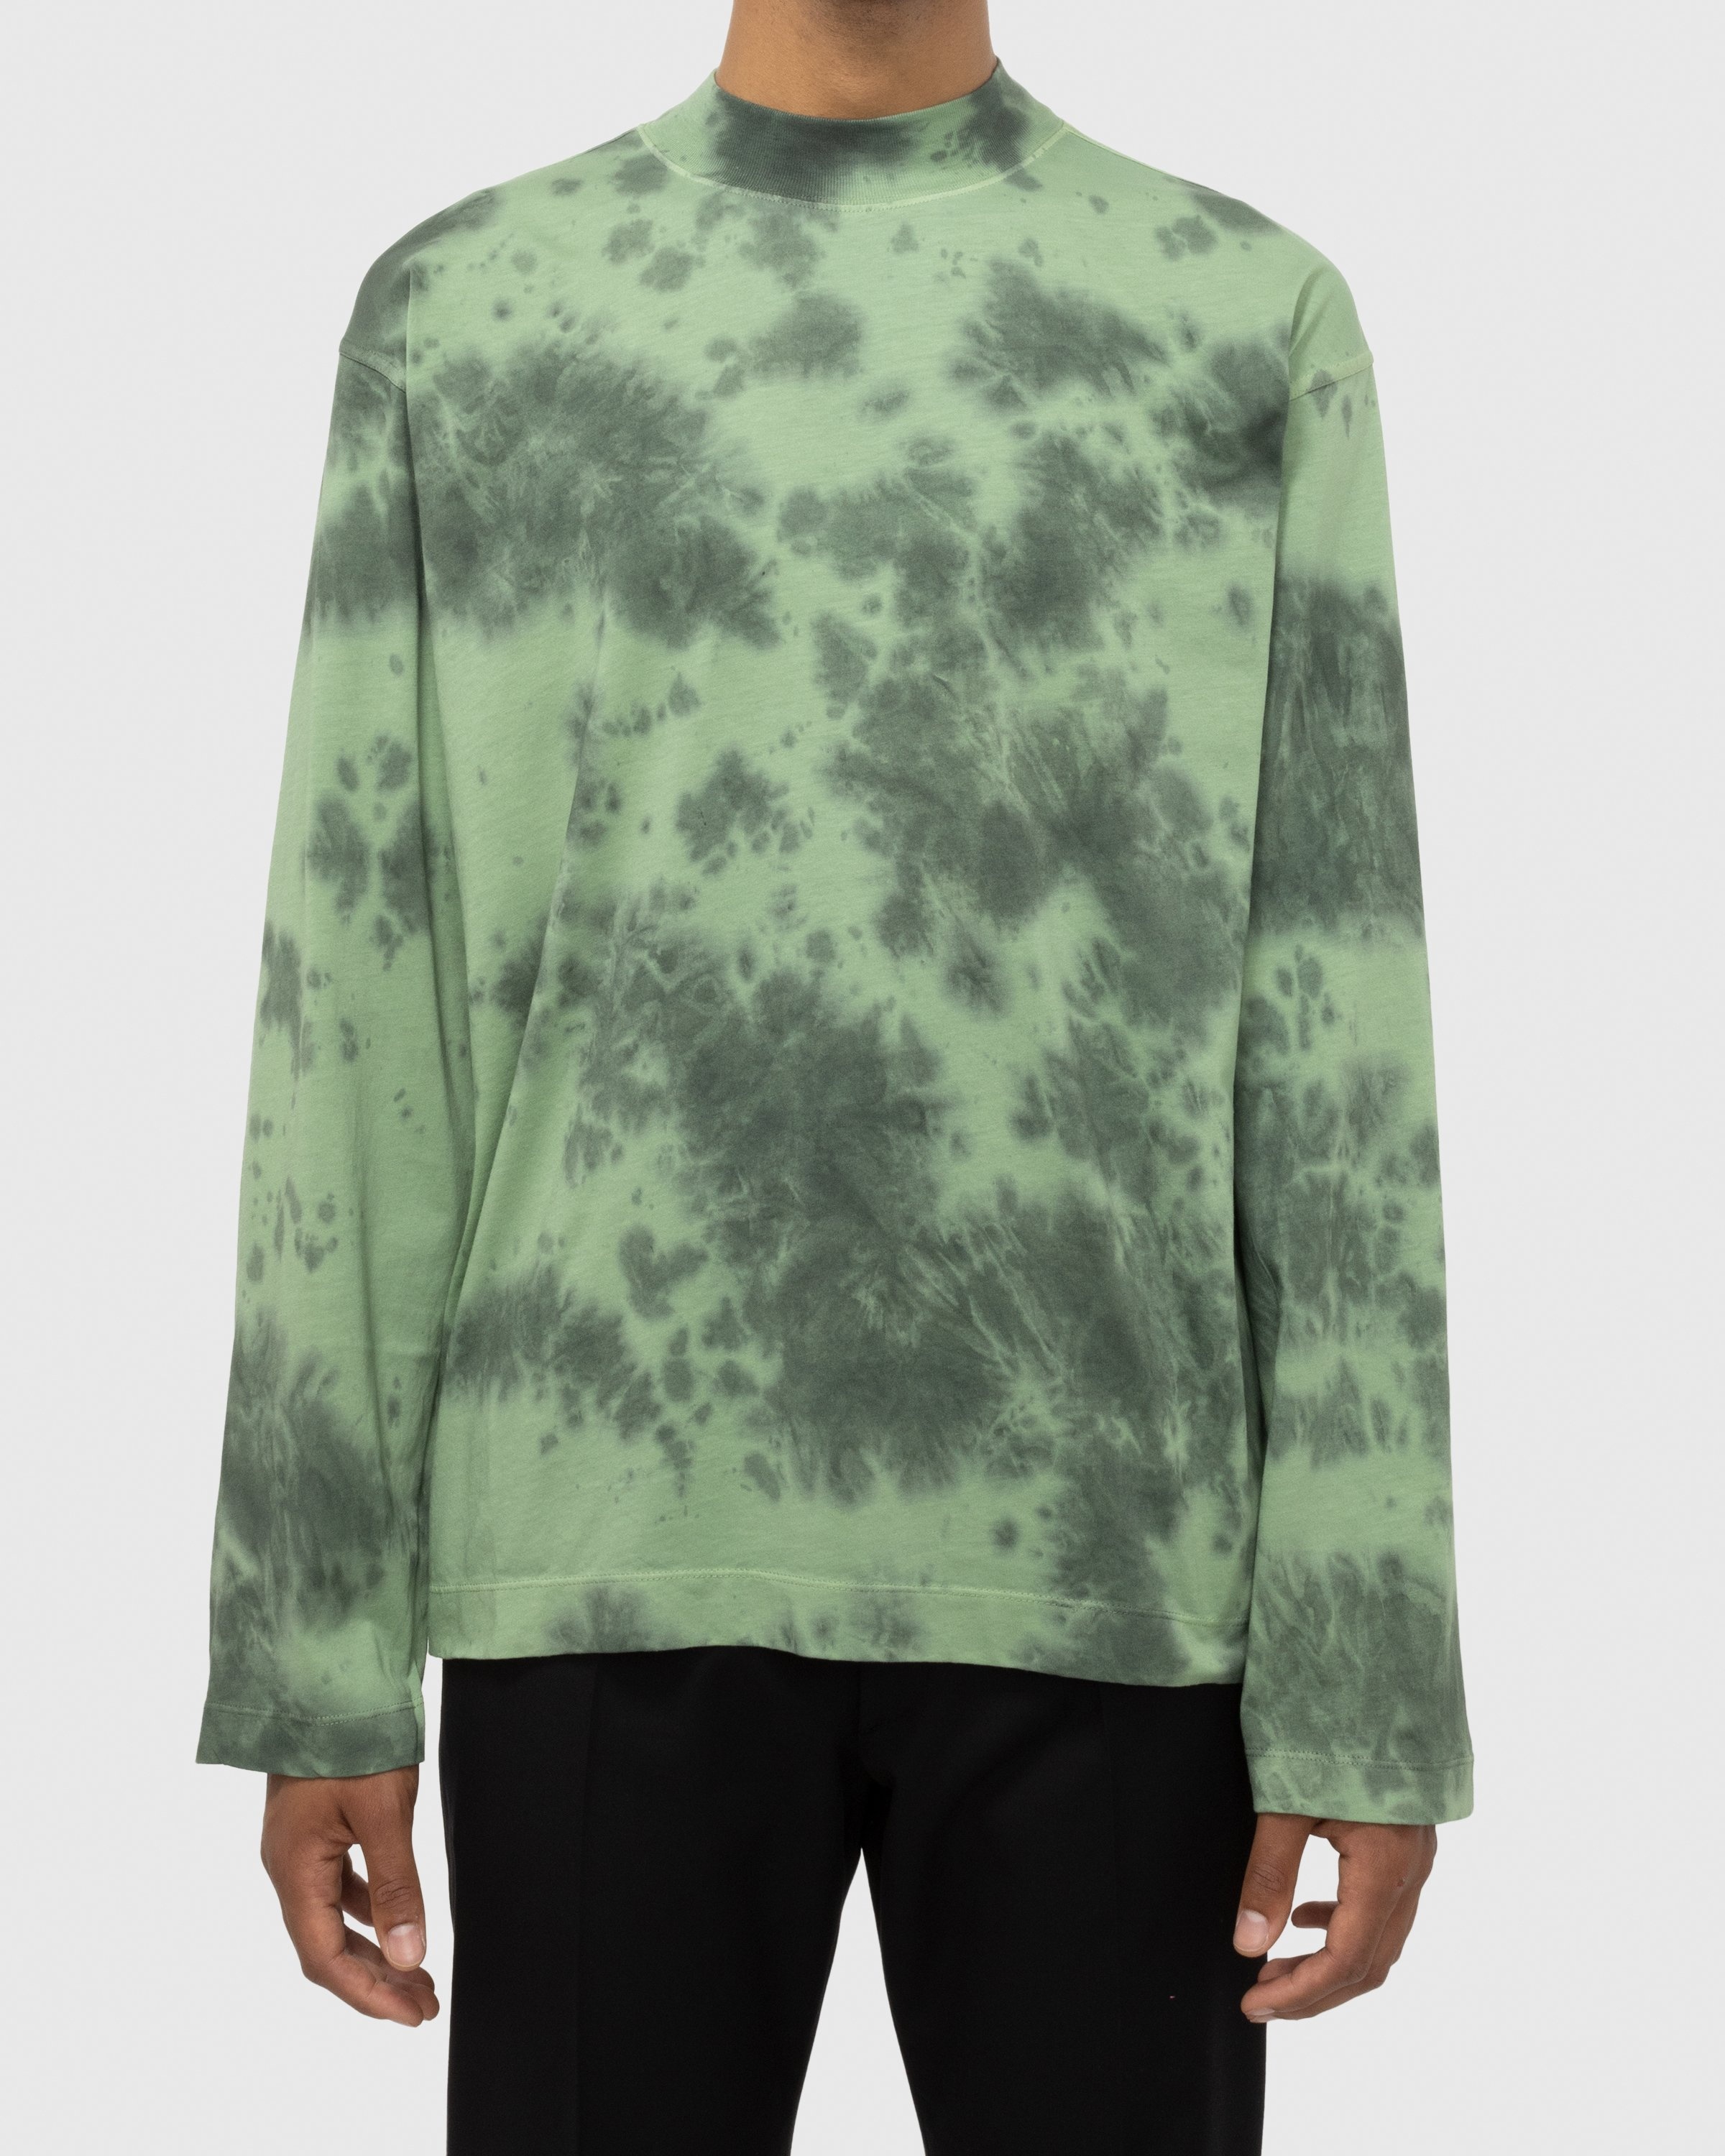 Dries van Noten – Heger T-Shirt Green - Shirts - Green - Image 2